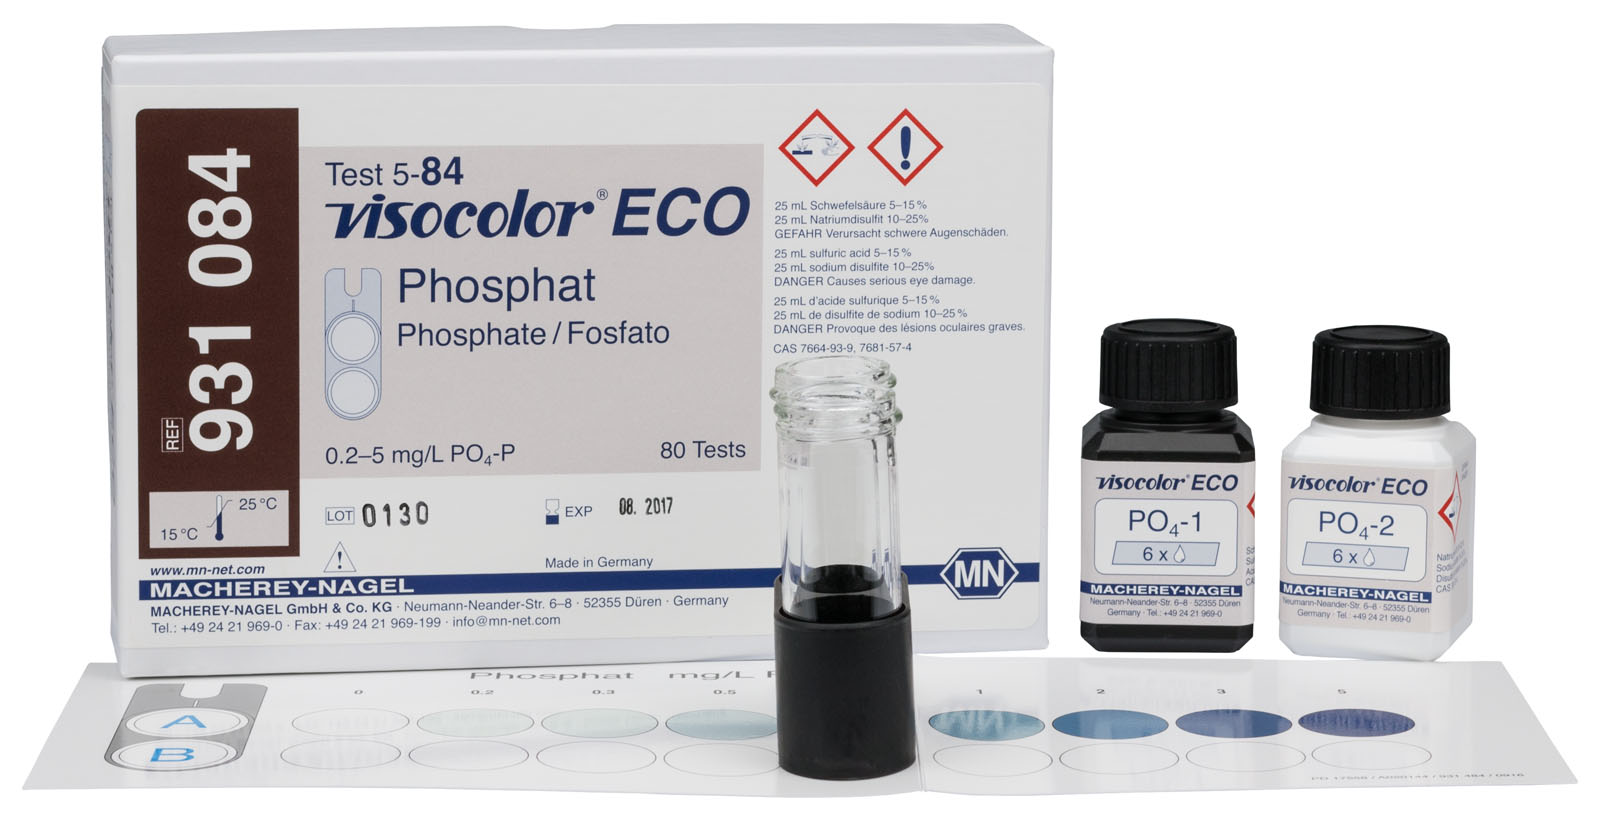 VISOCOLOR® ECO Phosphat-Messbesteck